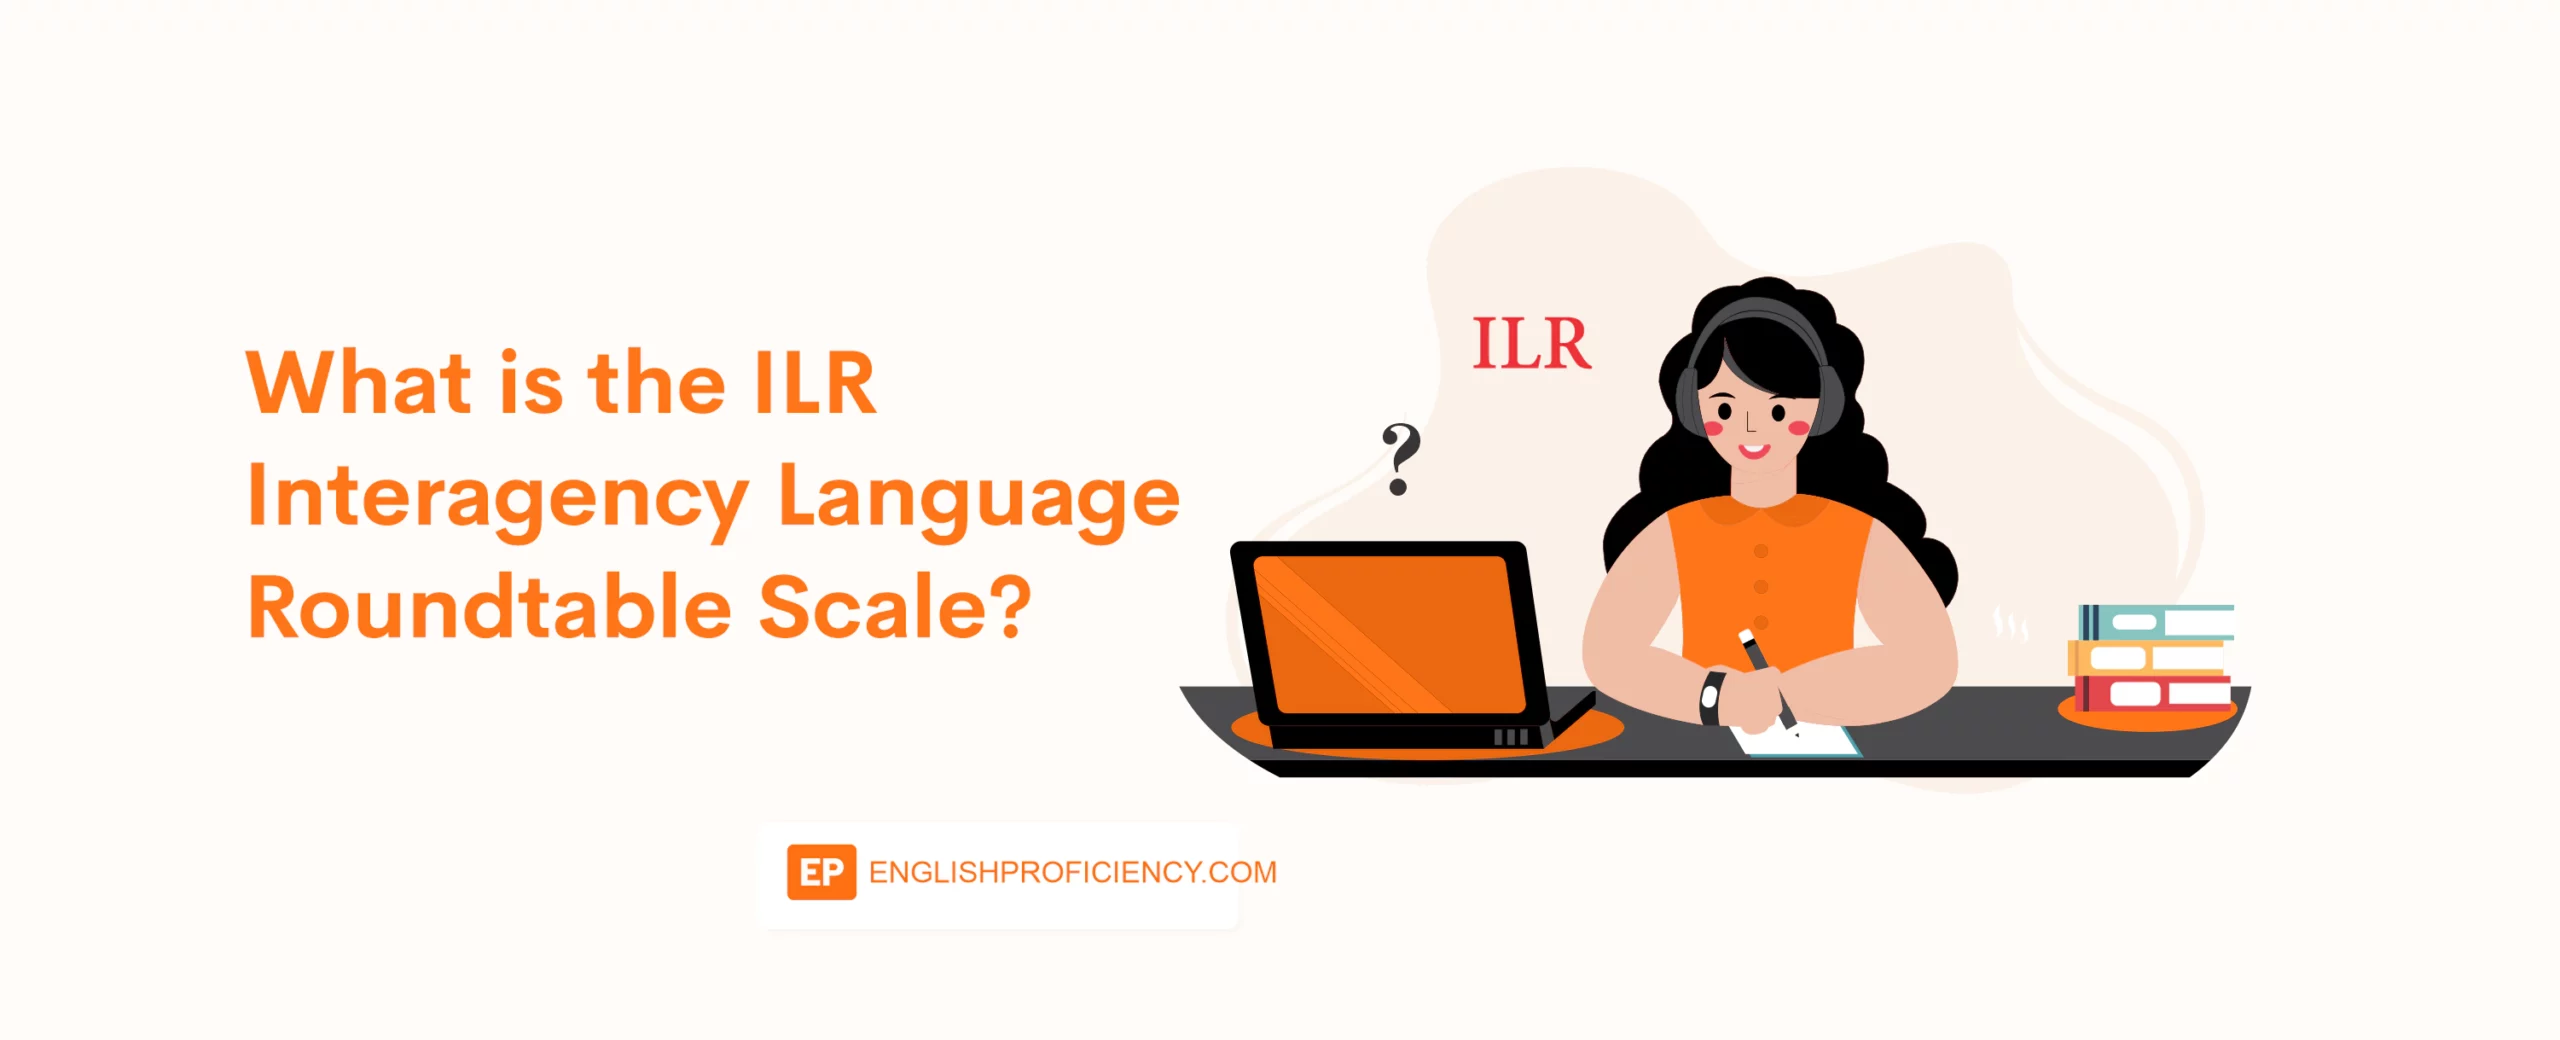 Interagency Language Roundtable Scale